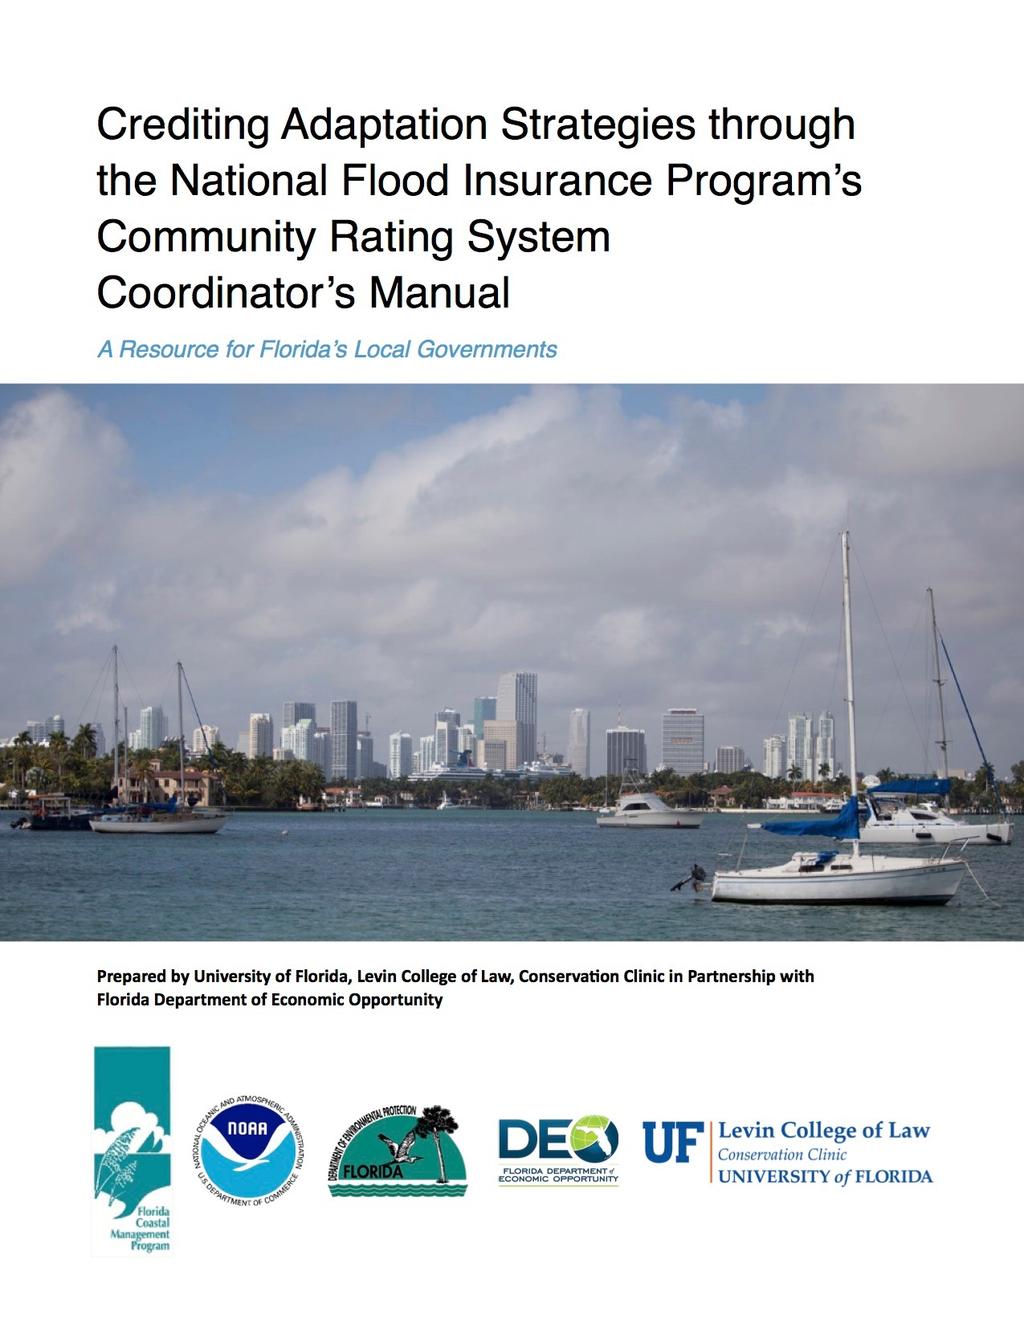 Crediting Adaptation Strategies through the National Flood